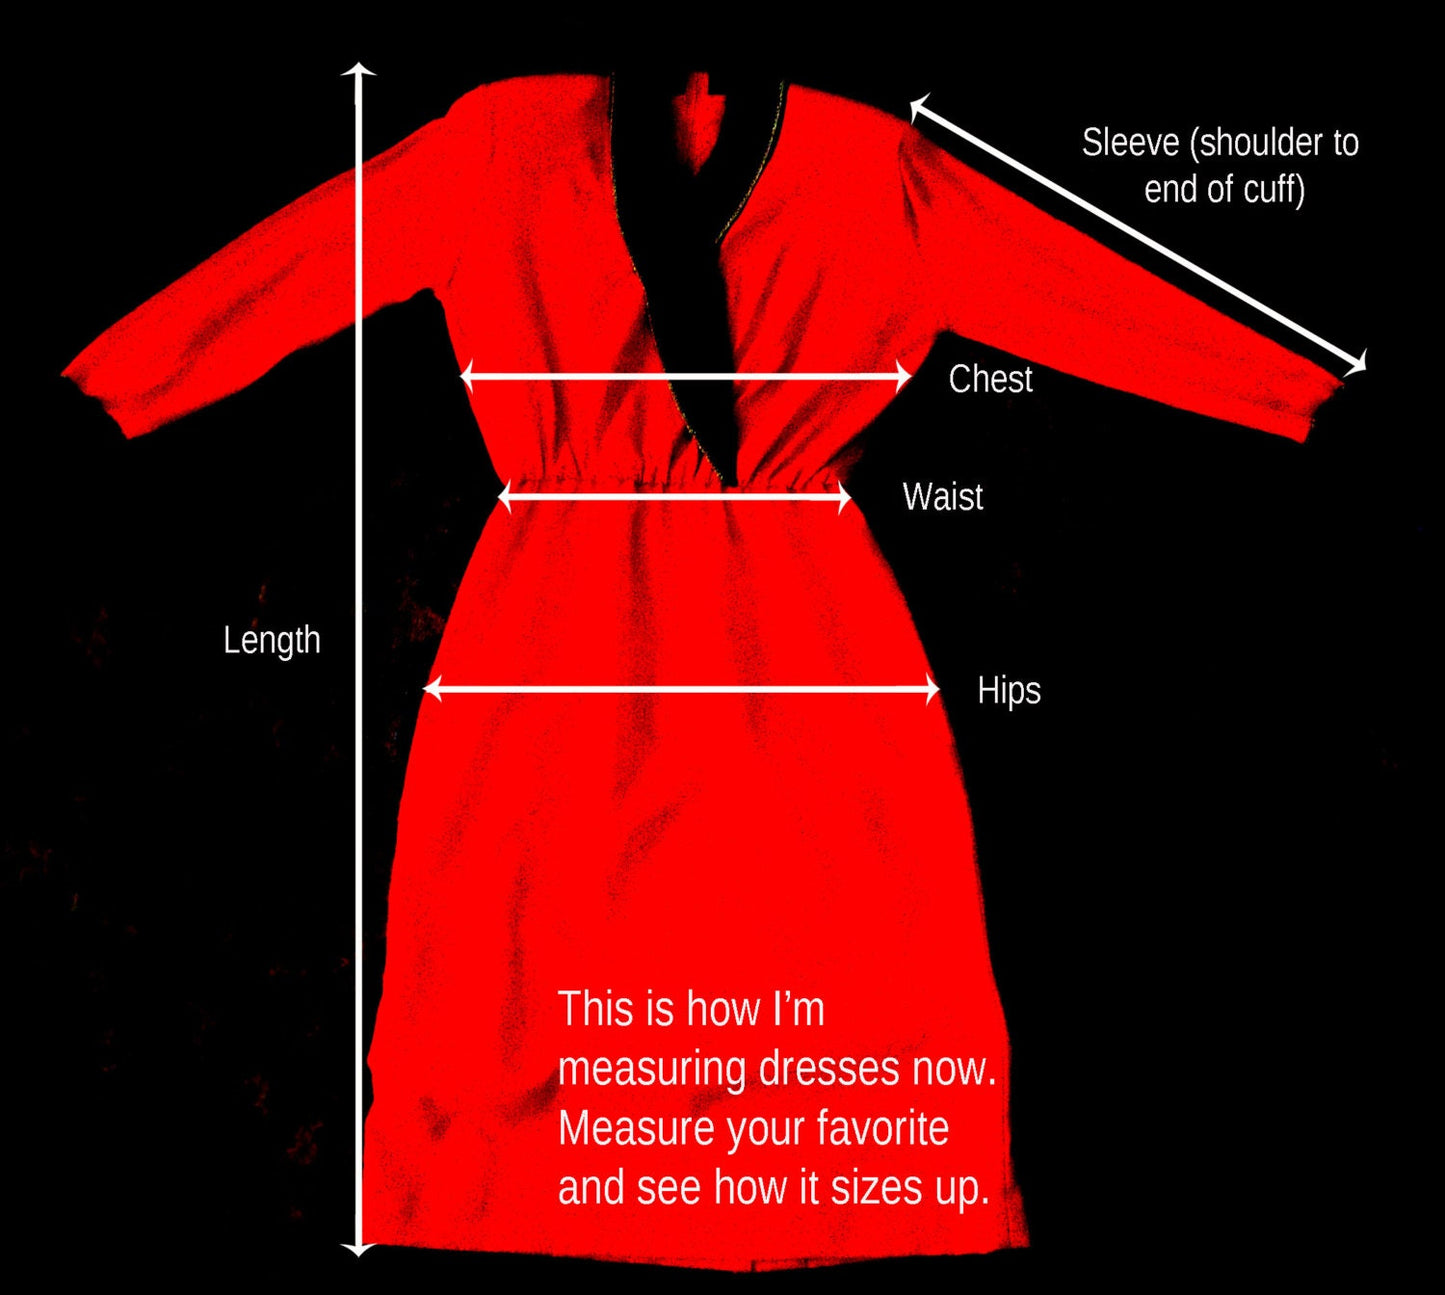 Vintage Long Sleeve Dress by Oscar de La Renta